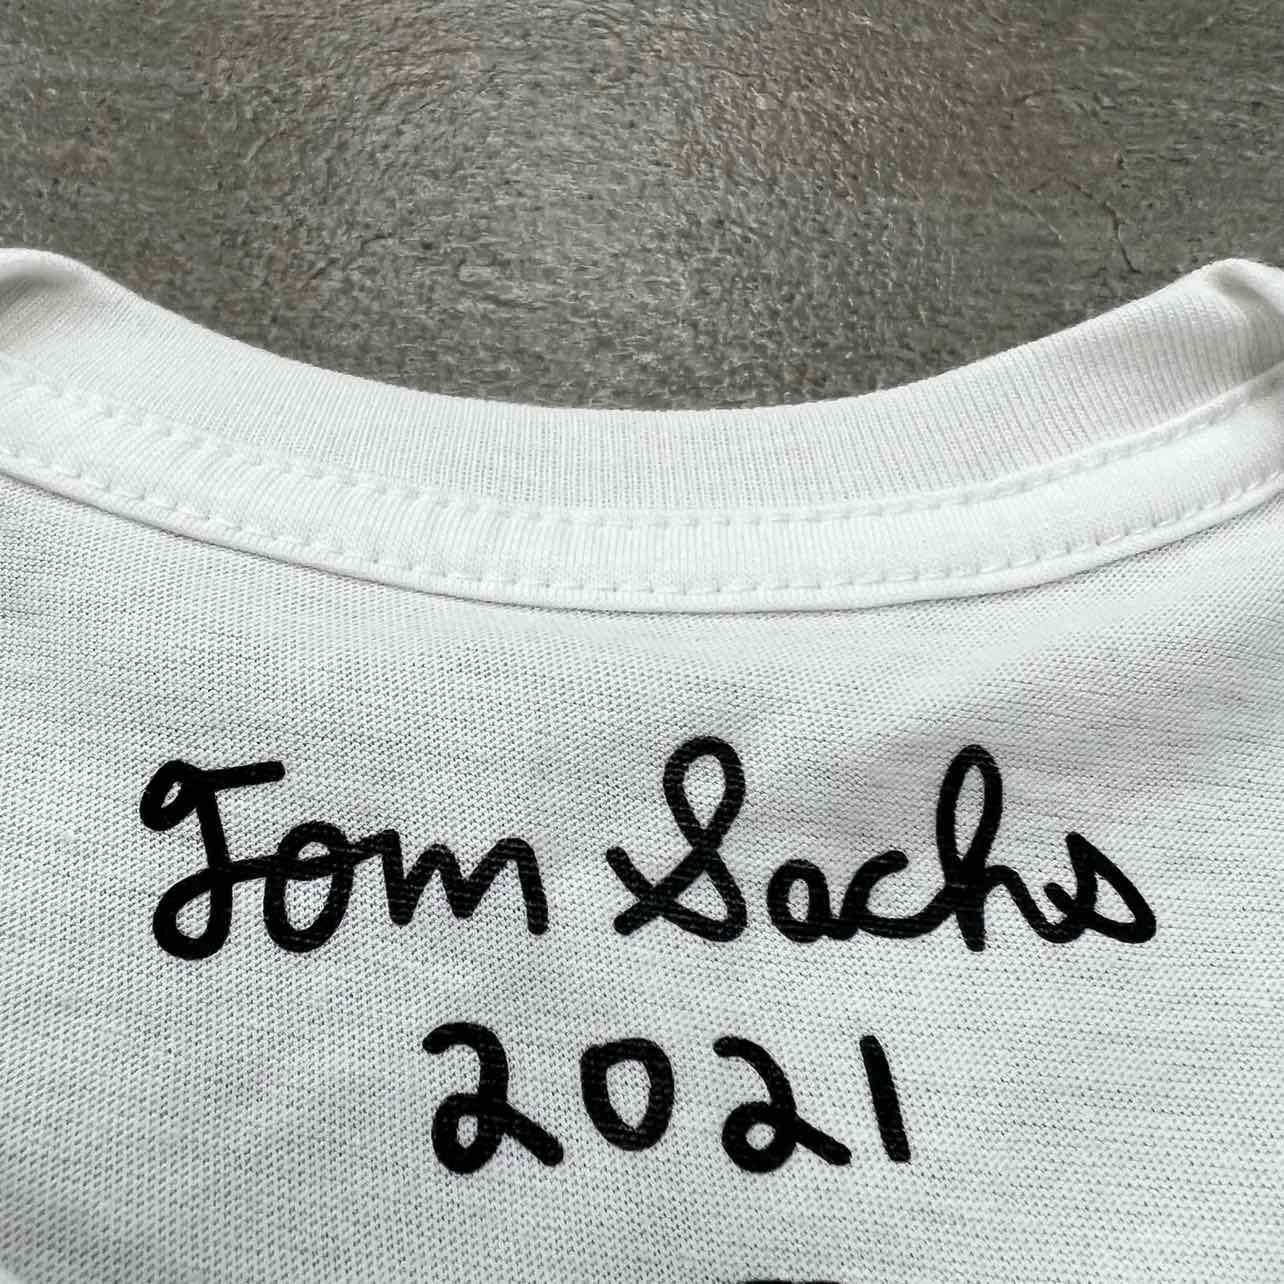 Tom Sachs T-Shirt &quot;SSENSE&quot; White New Size S